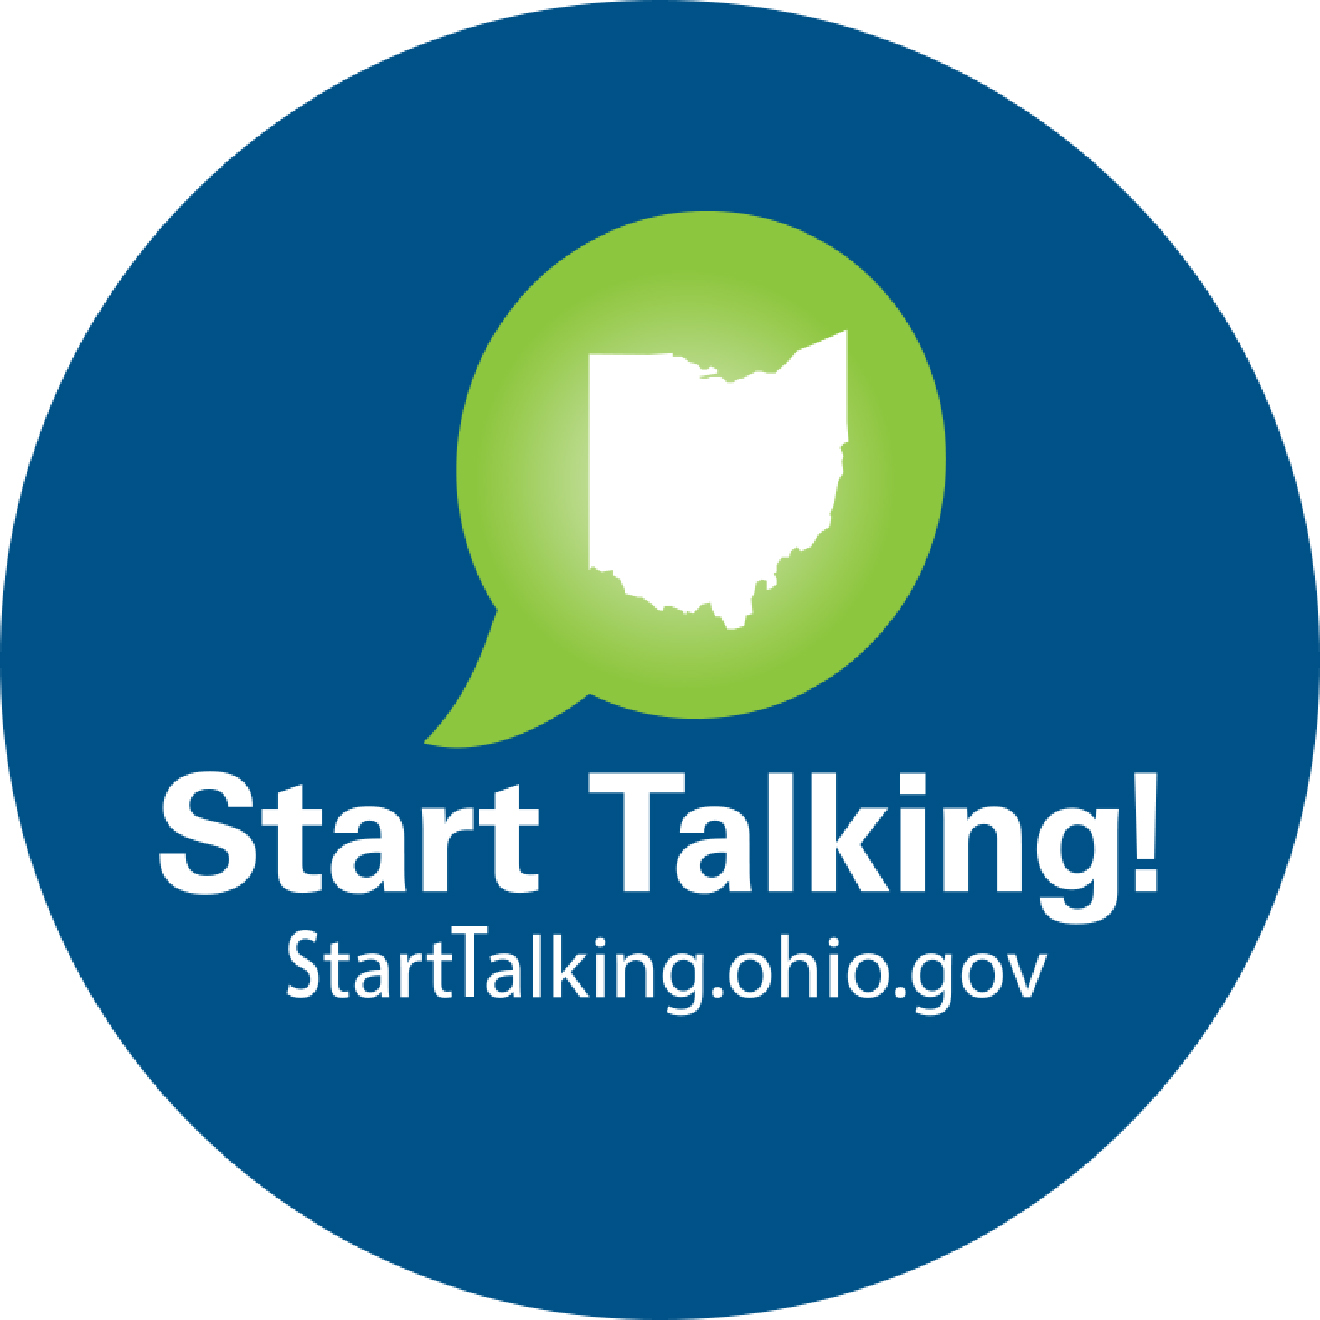 Start Talking!